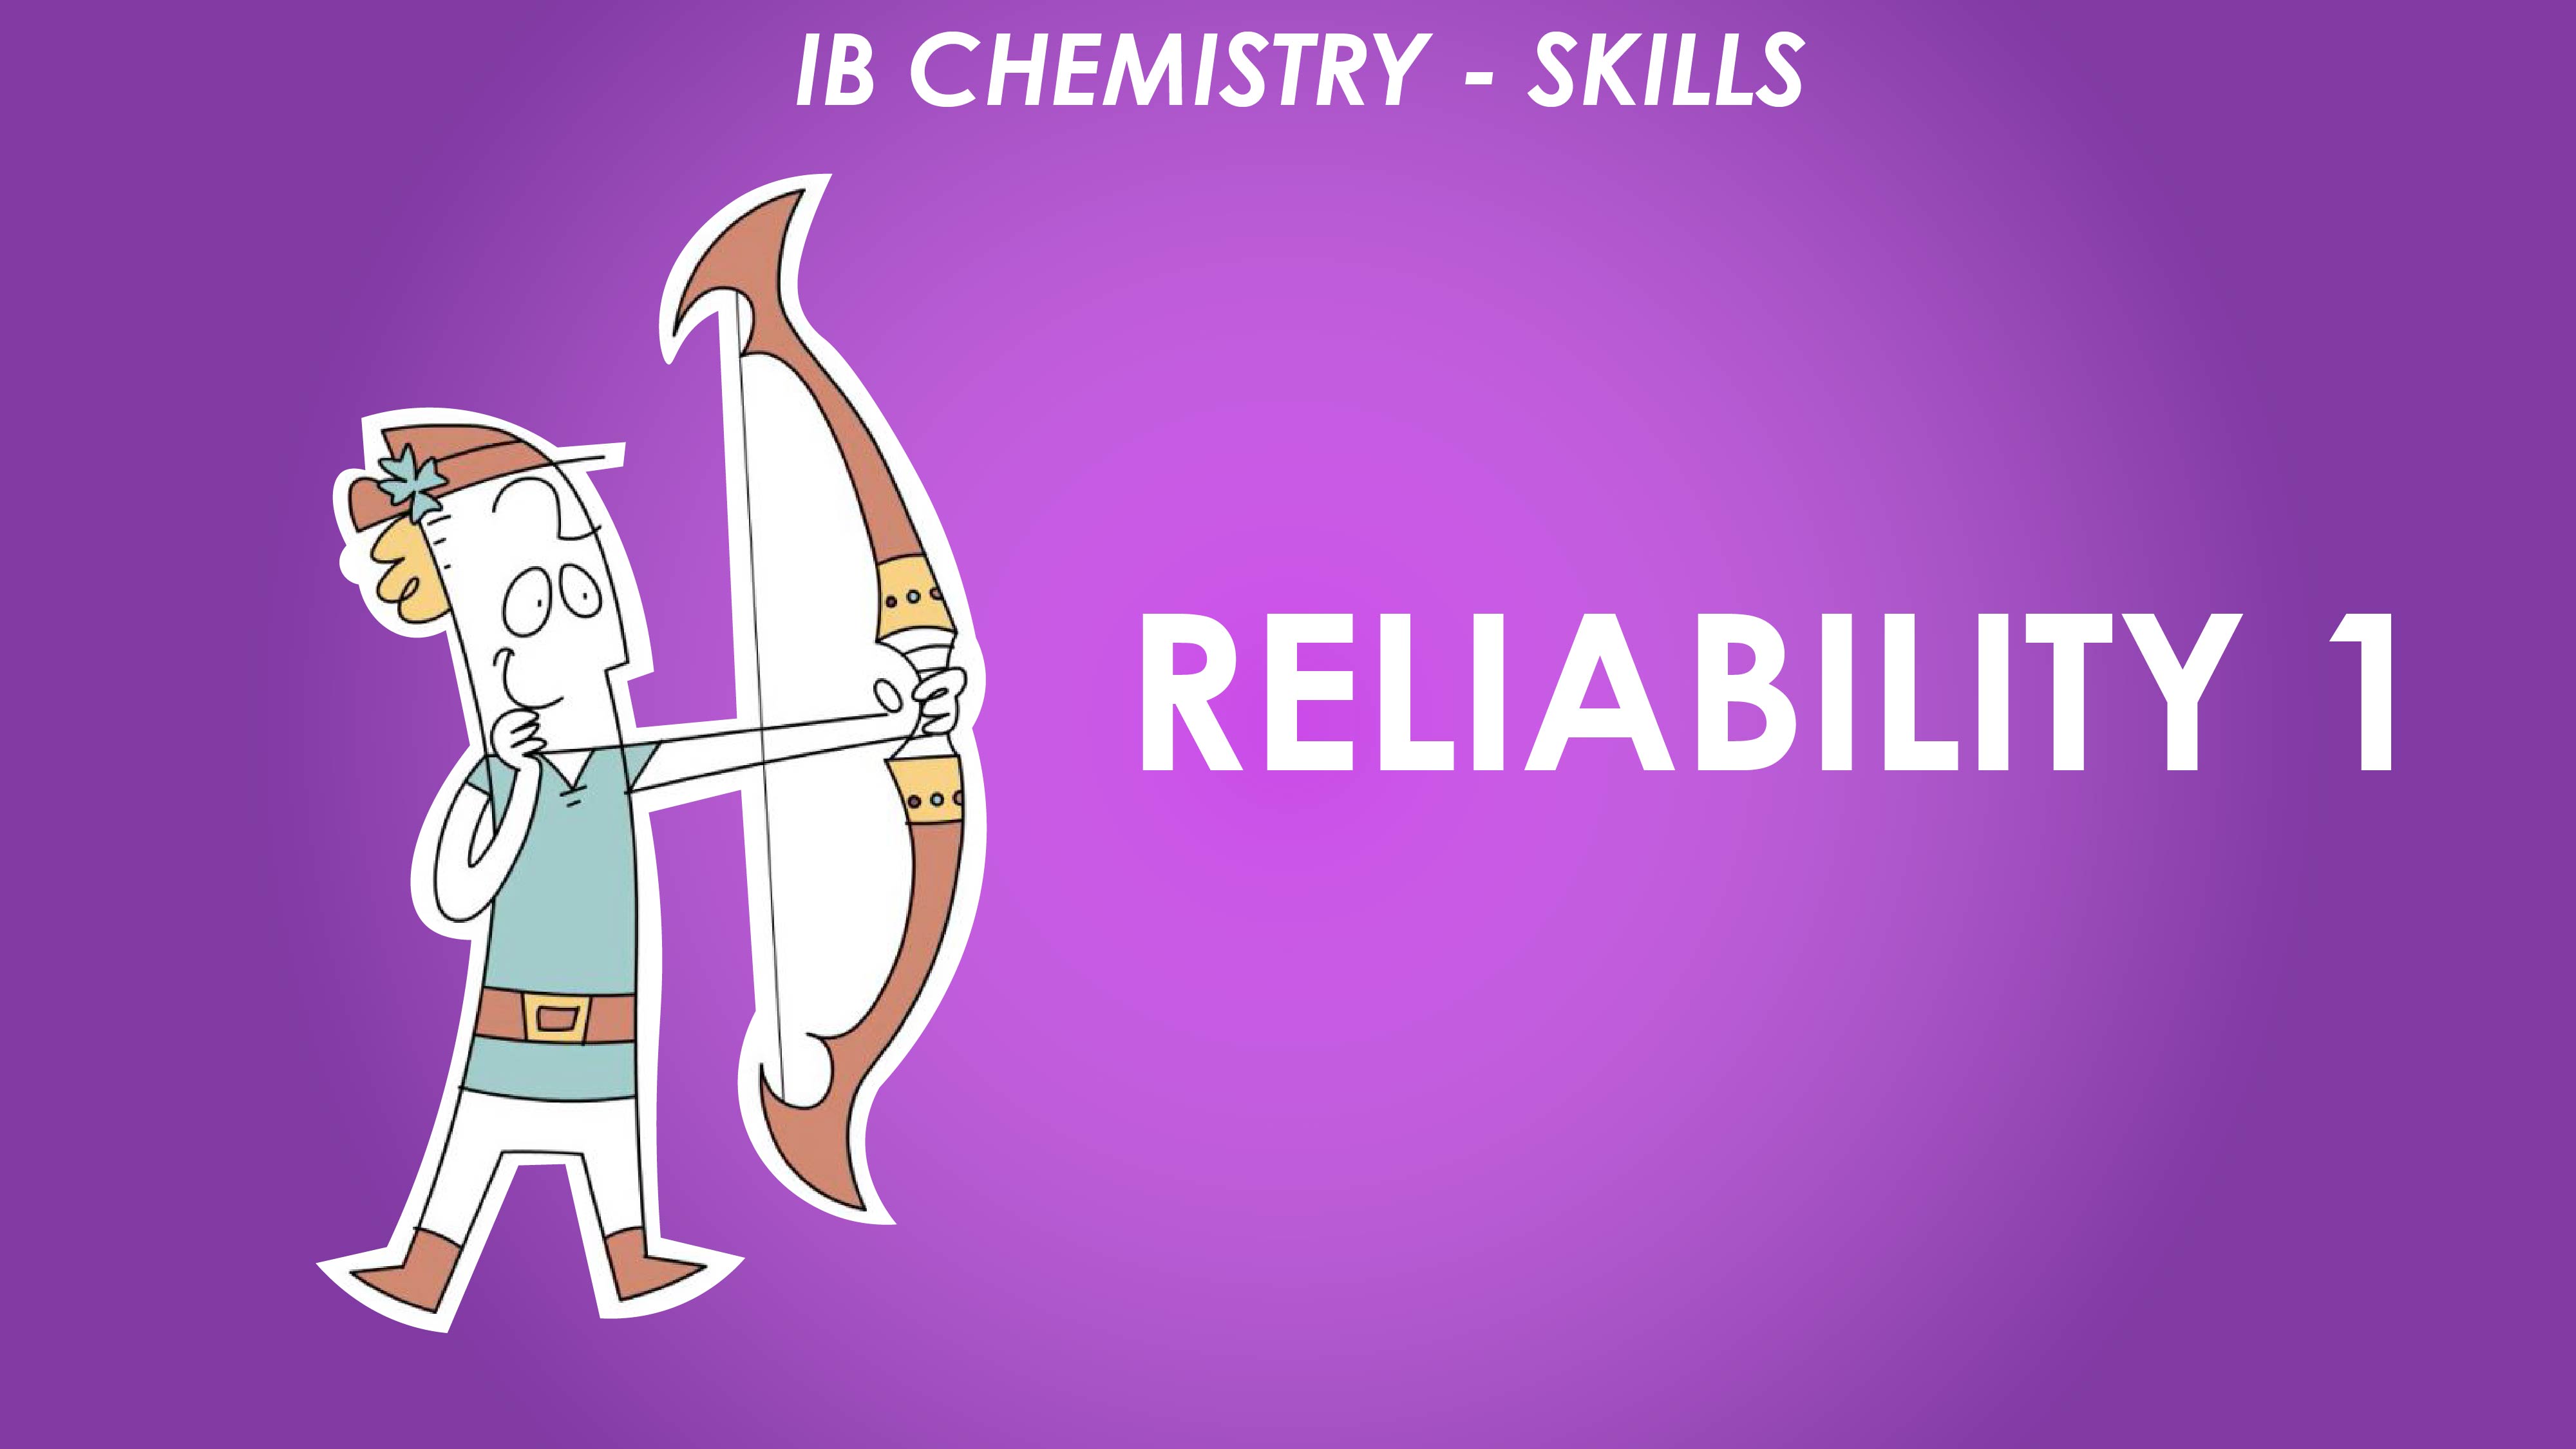 Reliability 1 - IB Physics Skills